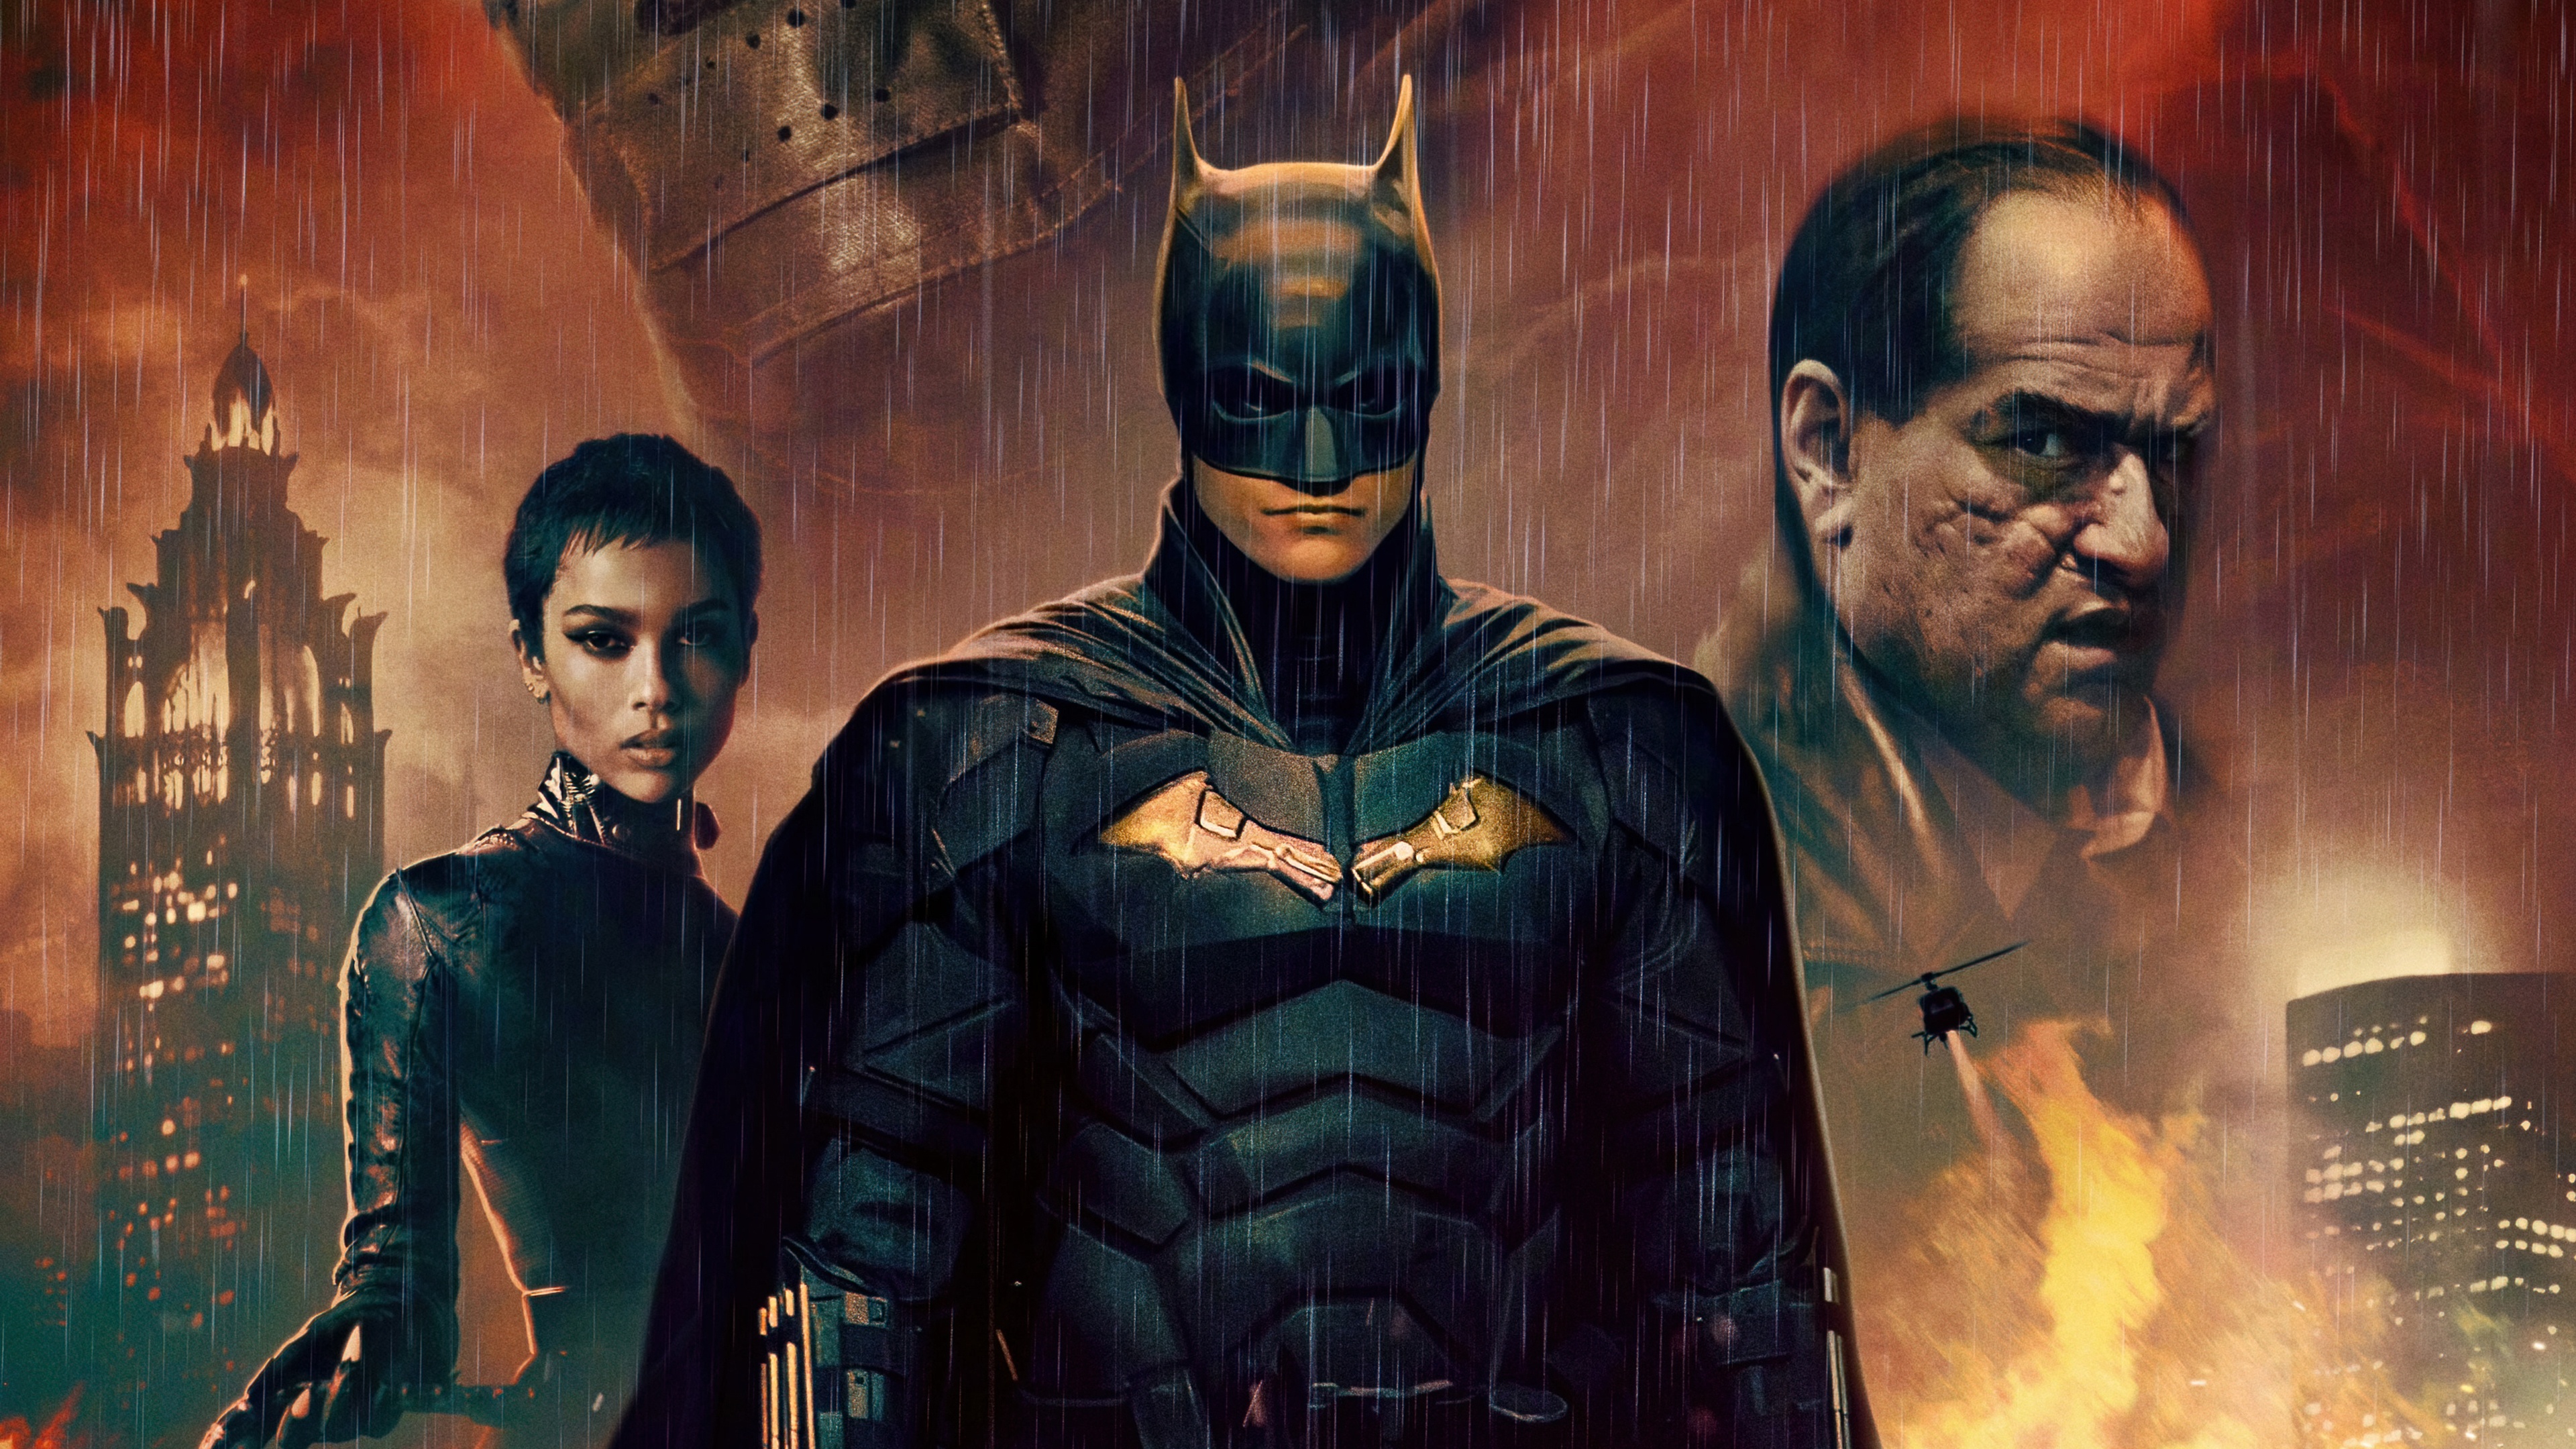 The Batman DC Darkness 2021 Poster 4K Mobile Wallpaper